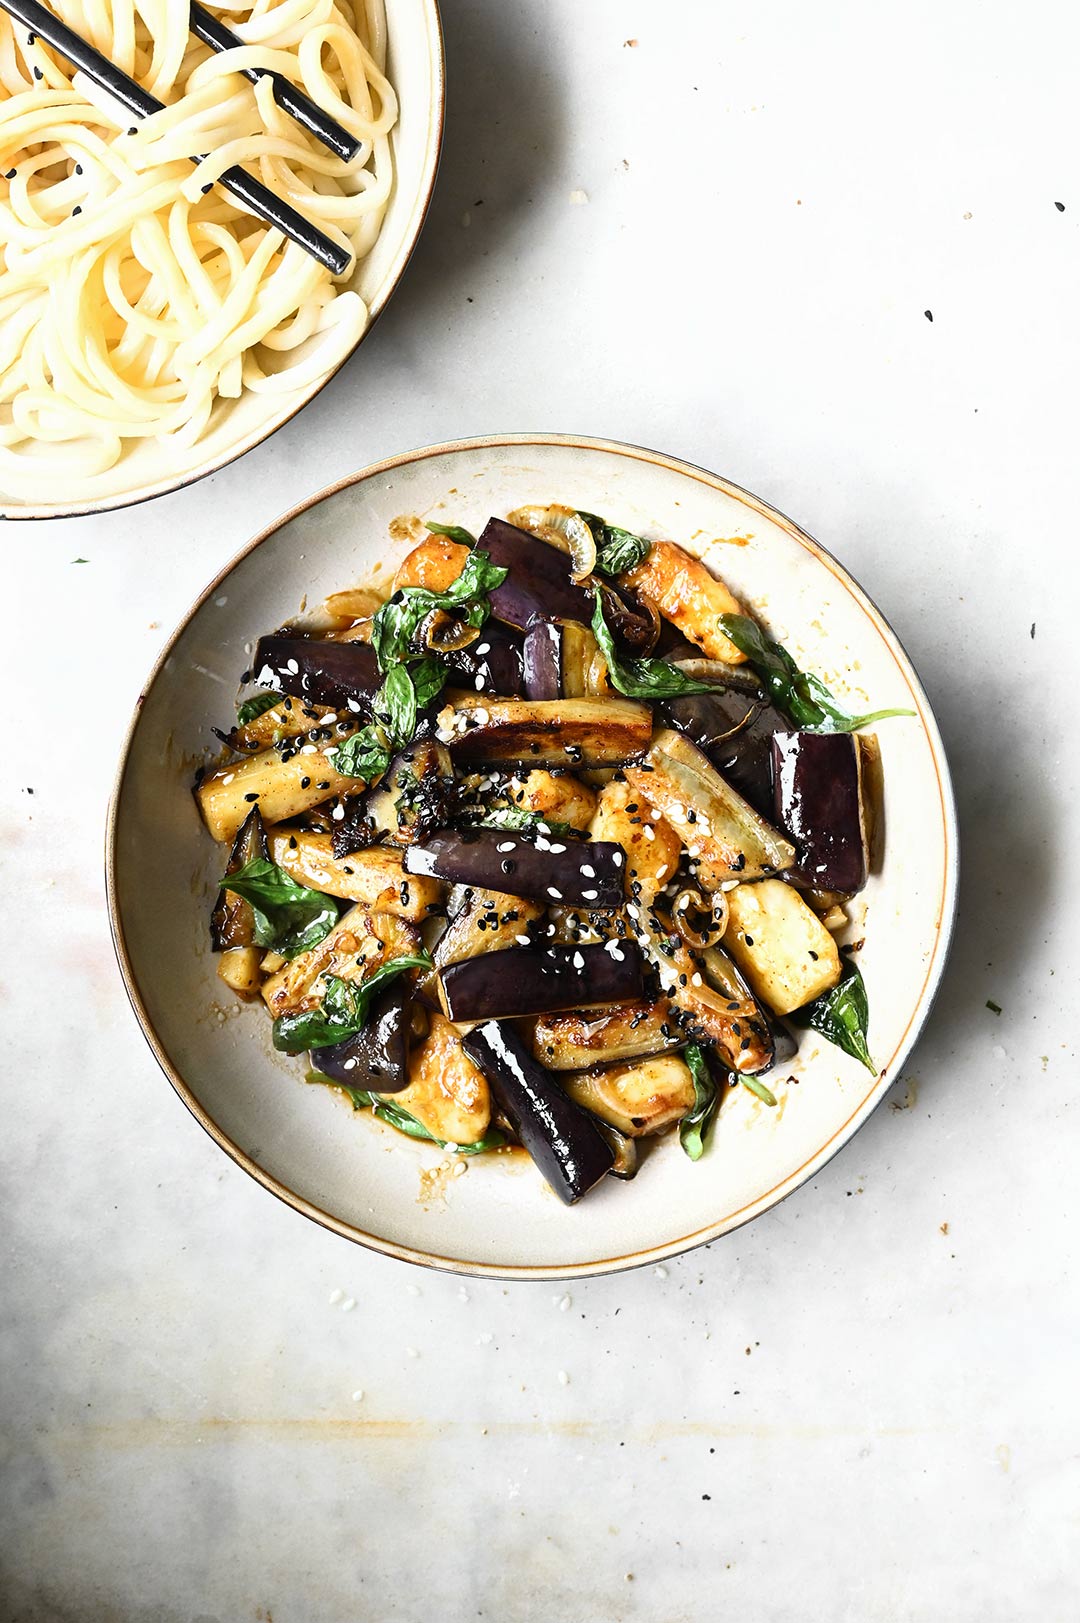 serving dumplings | Eggplant and halloumi stir-fry